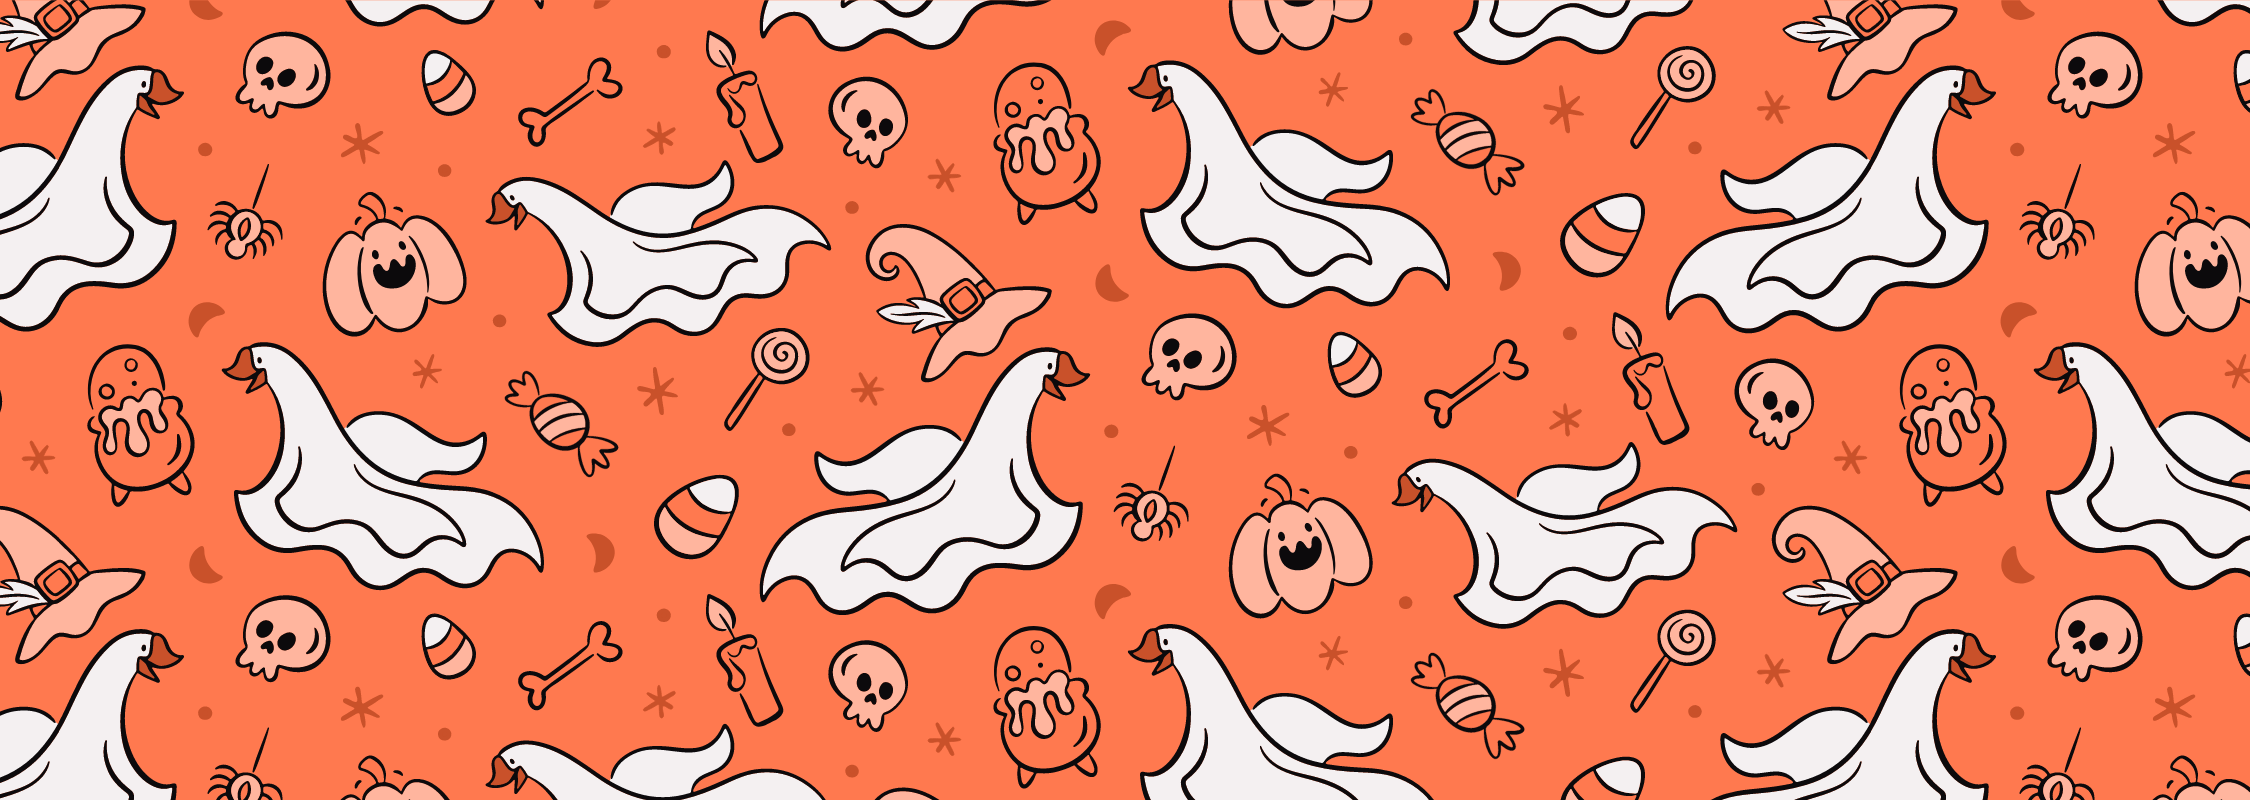 Unique Halloween Scavenger Hunt Experience Ideas | Goosechase